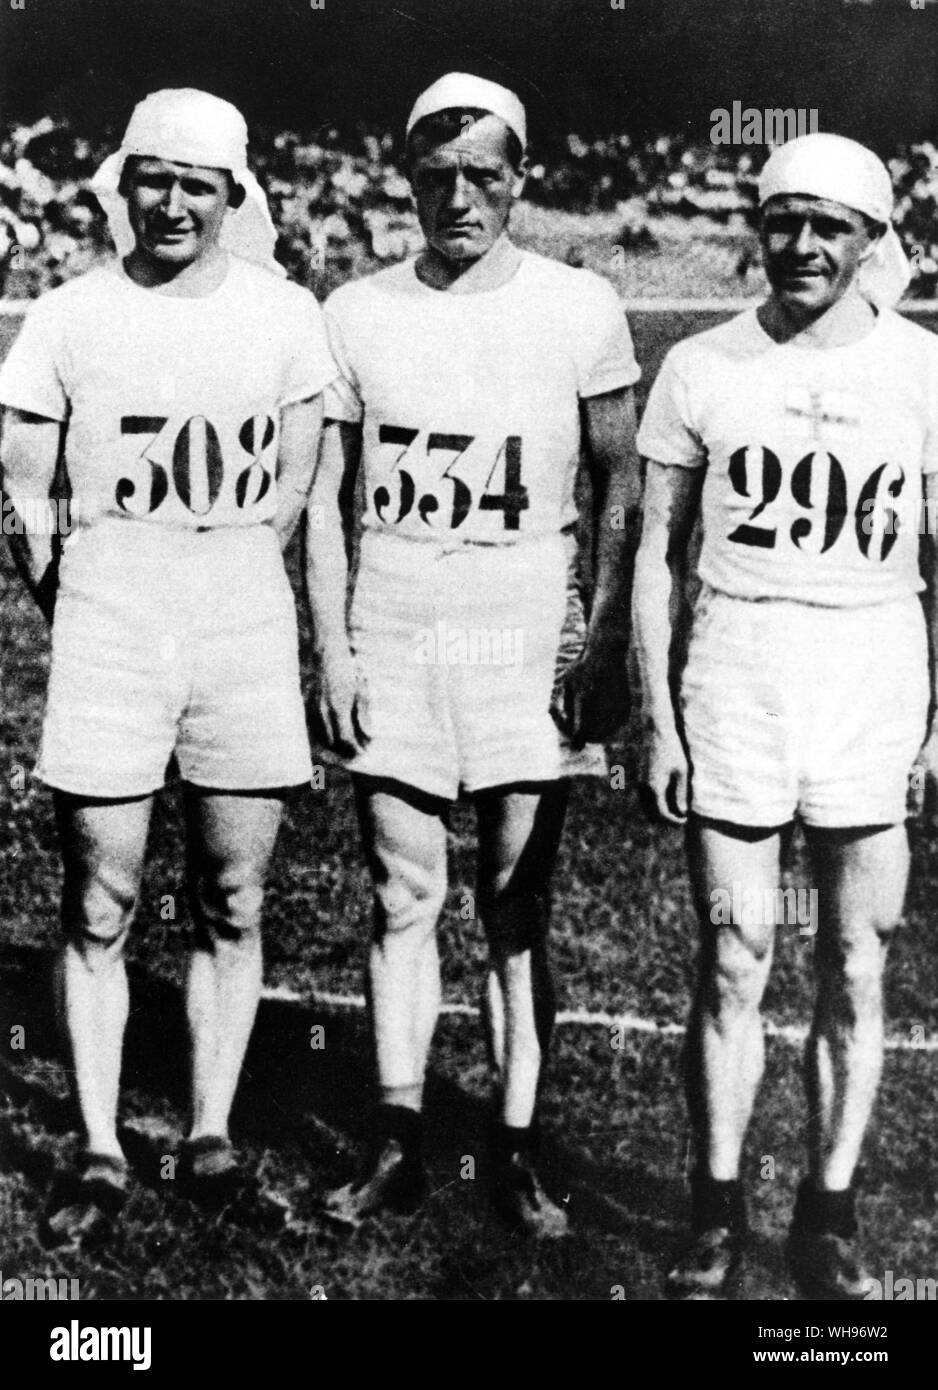 France, Paris Olympics, 1924: Finland's marathon team. Hannes Kolehmainen, Albin Stenroos (winner) and Lauri Halonen. Stock Photo